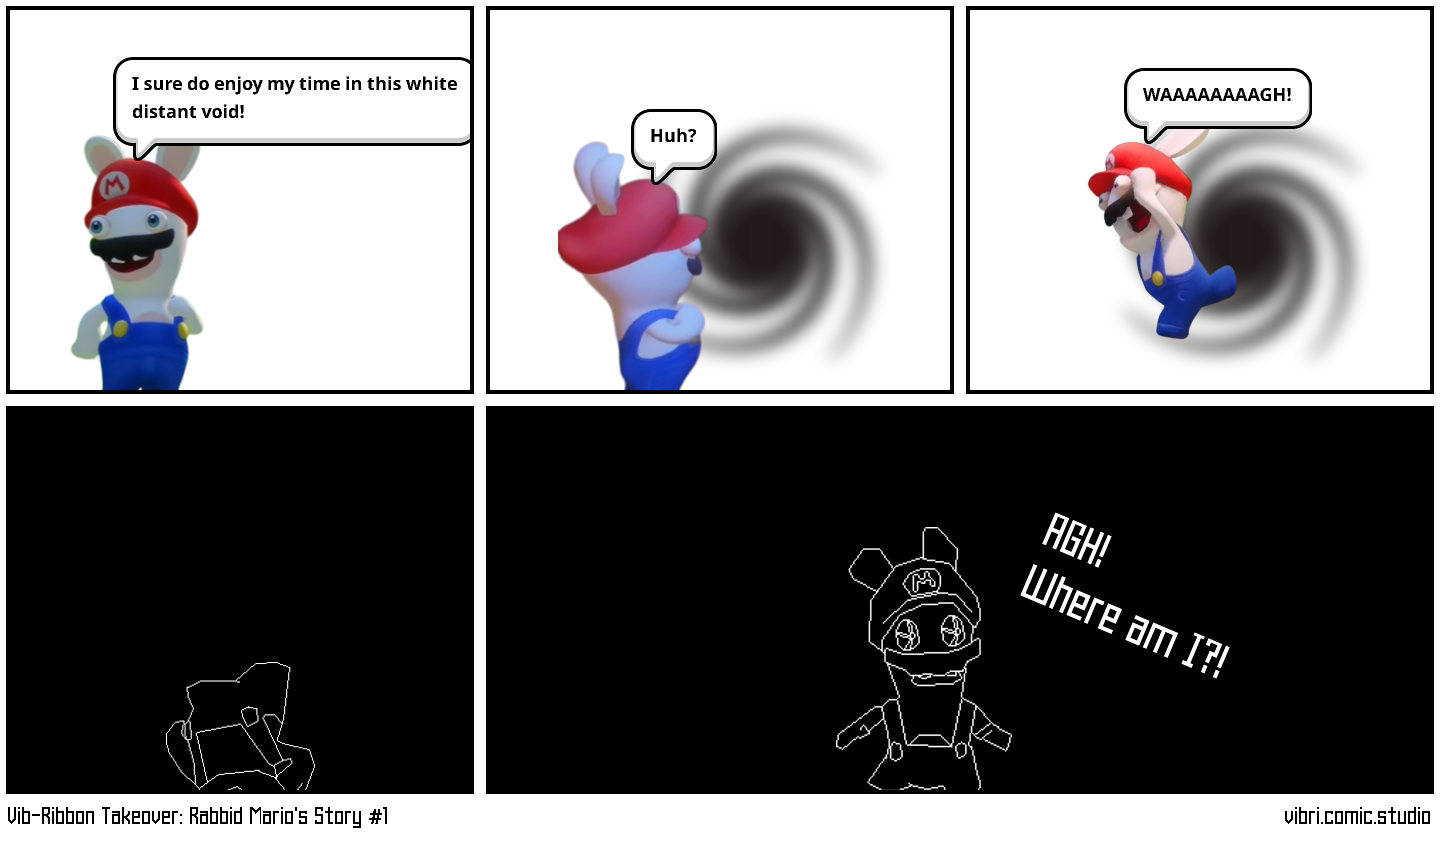 Vib-Ribbon Takeover: Rabbid Mario's Story #1